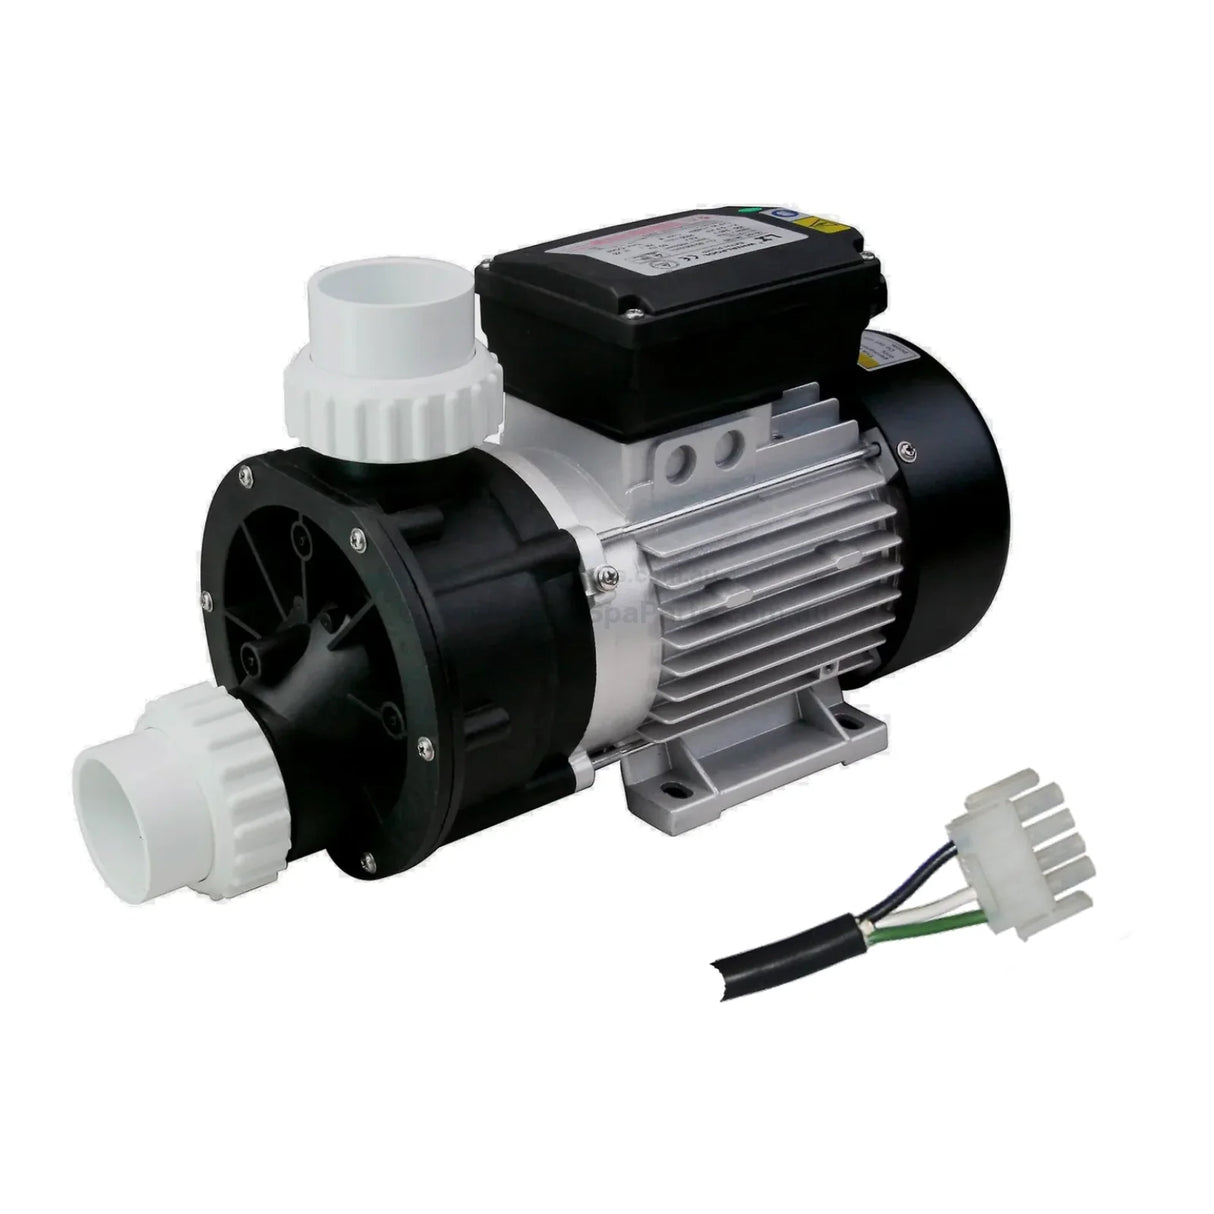 Lx Whirlpool Ja75 Spa Circulation Pump 0.75Hp 500W Amp Plug - Circulation / Filtration Pumps